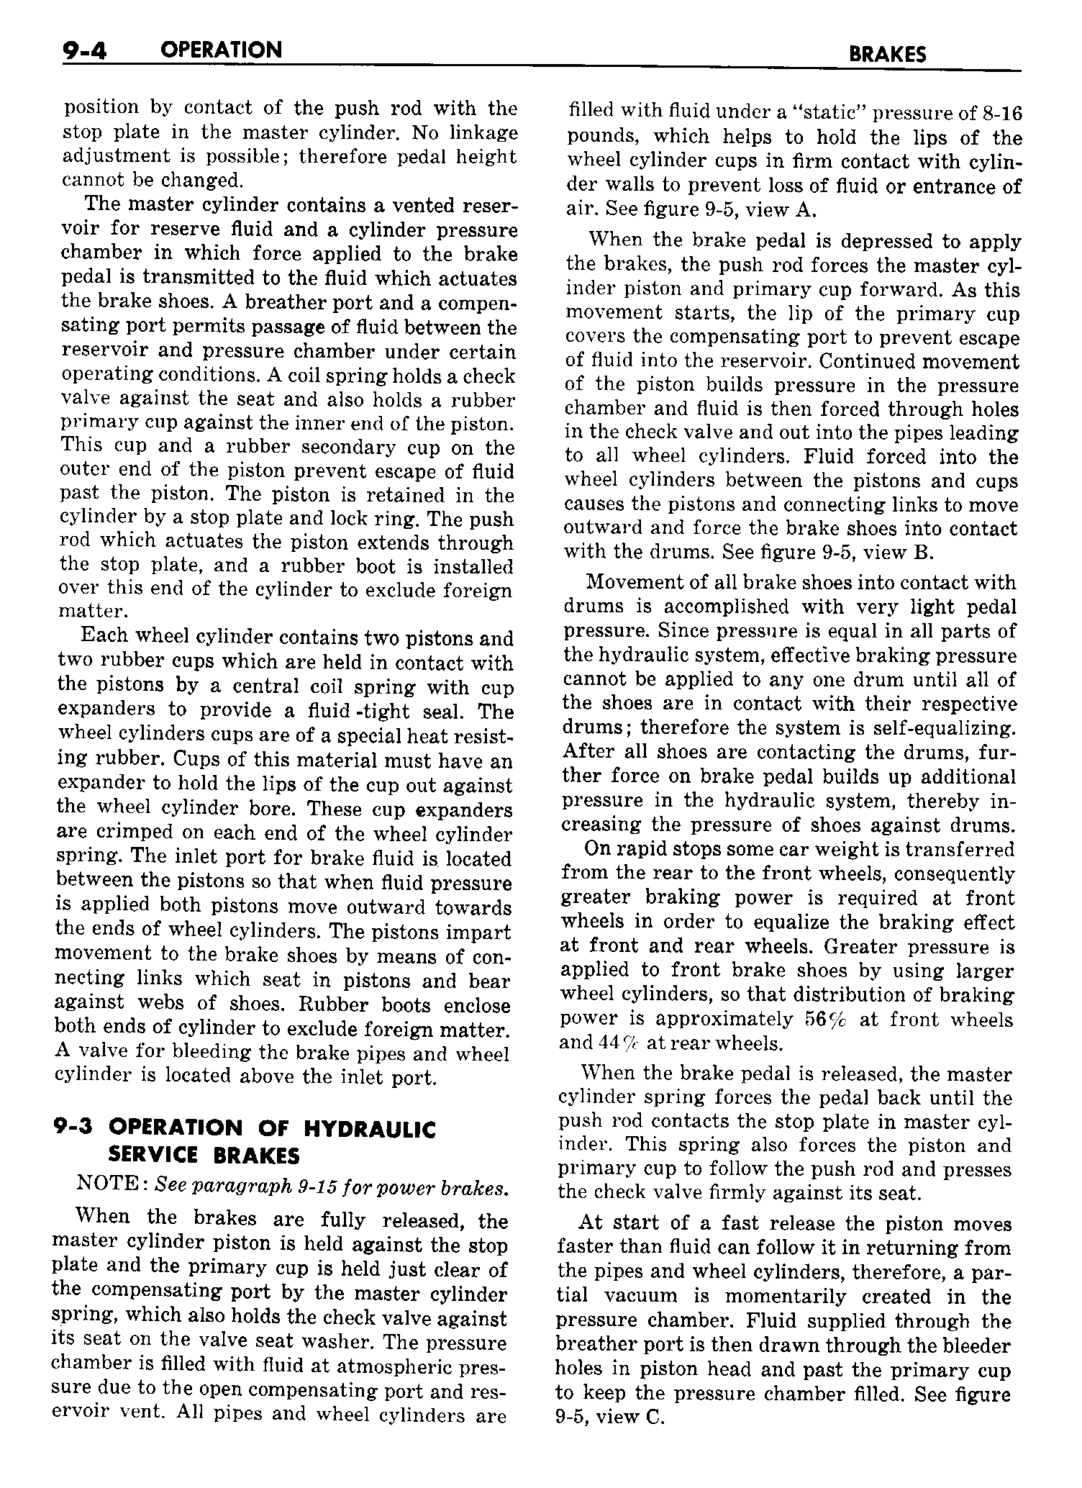 n_10 1960 Buick Shop Manual - Brakes-004-004.jpg